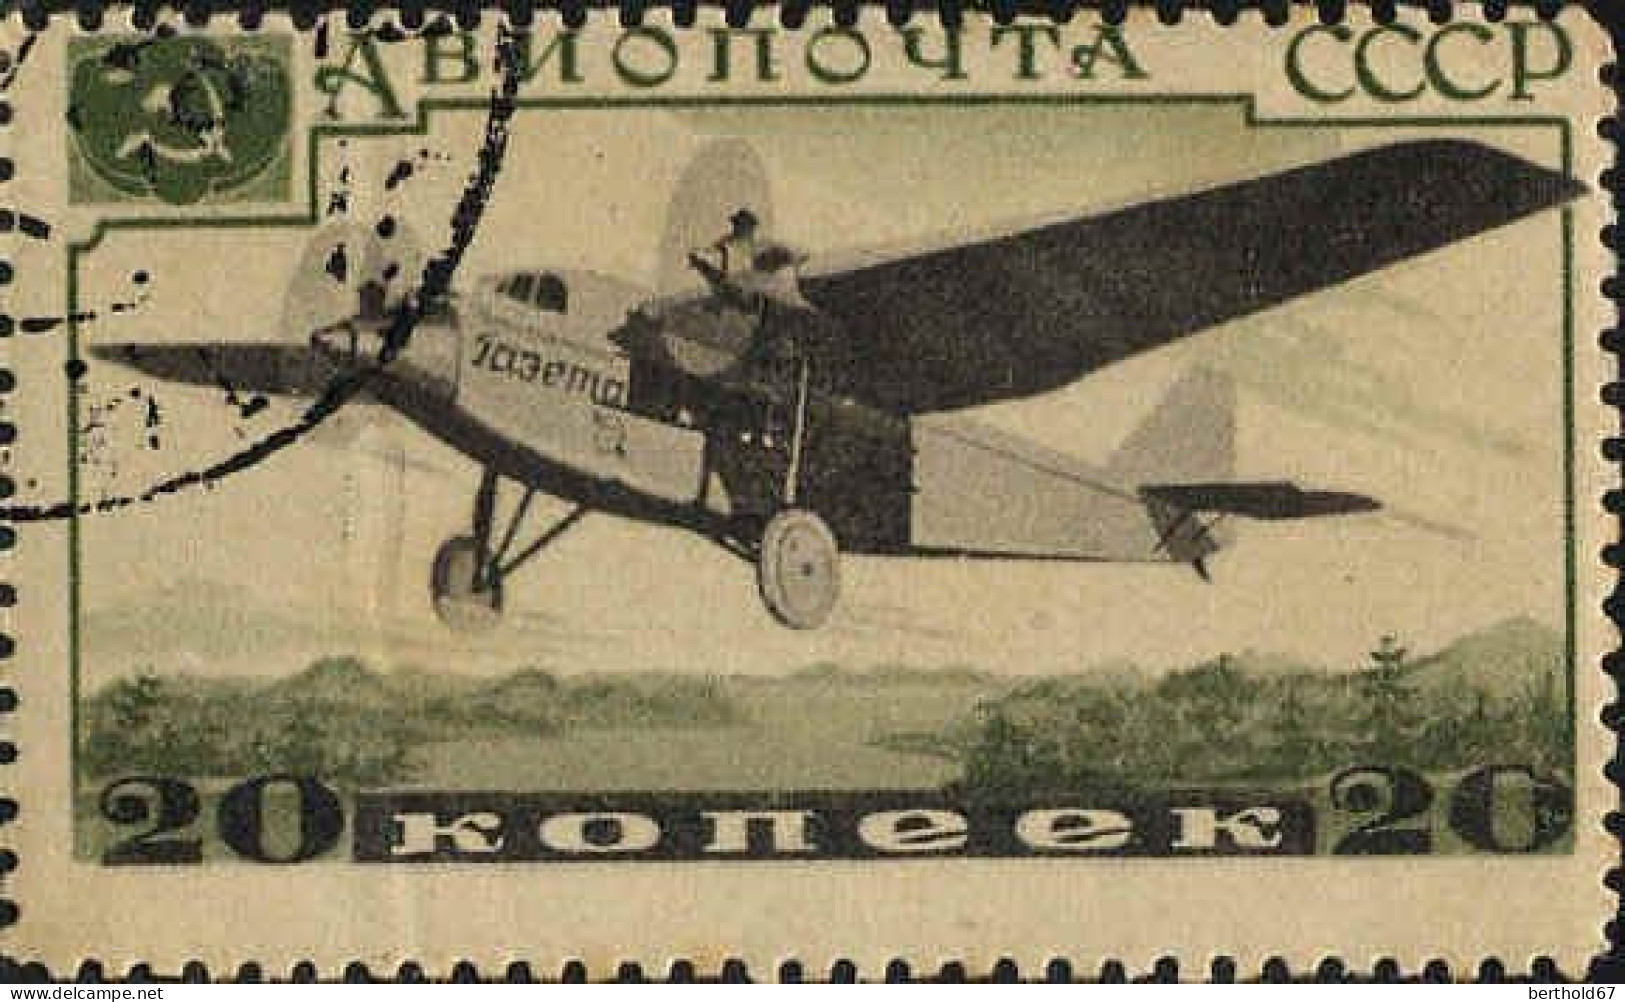 Russie Avion Obl Yv: 61 Mi:572 Antonov-9 (cachet Rond) - Used Stamps